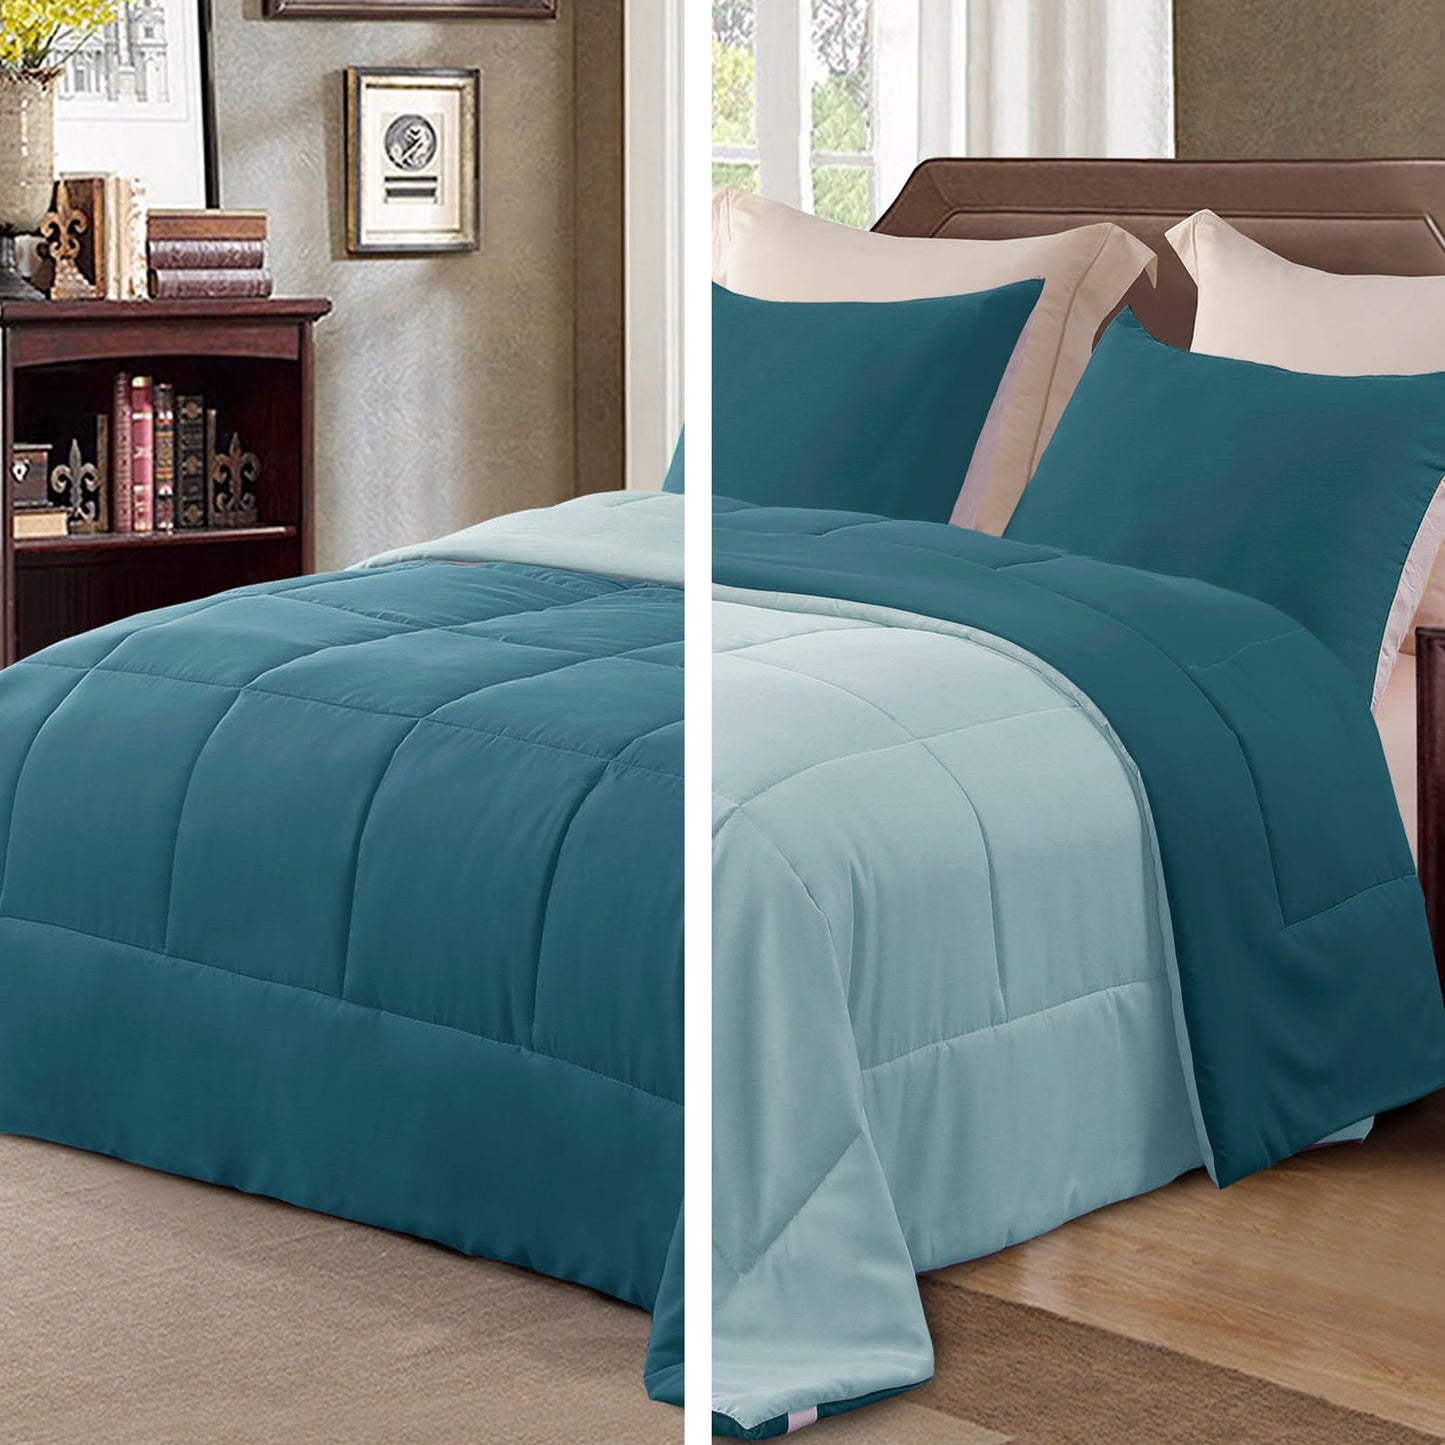 Exclusivo Mezcla Lightweight Reversible 3-Piece Comforter Set All Seasons, Down Alternative Comforter with 2 Pillow Shams, Queen Size, Dusty Teal/ Spa Blue